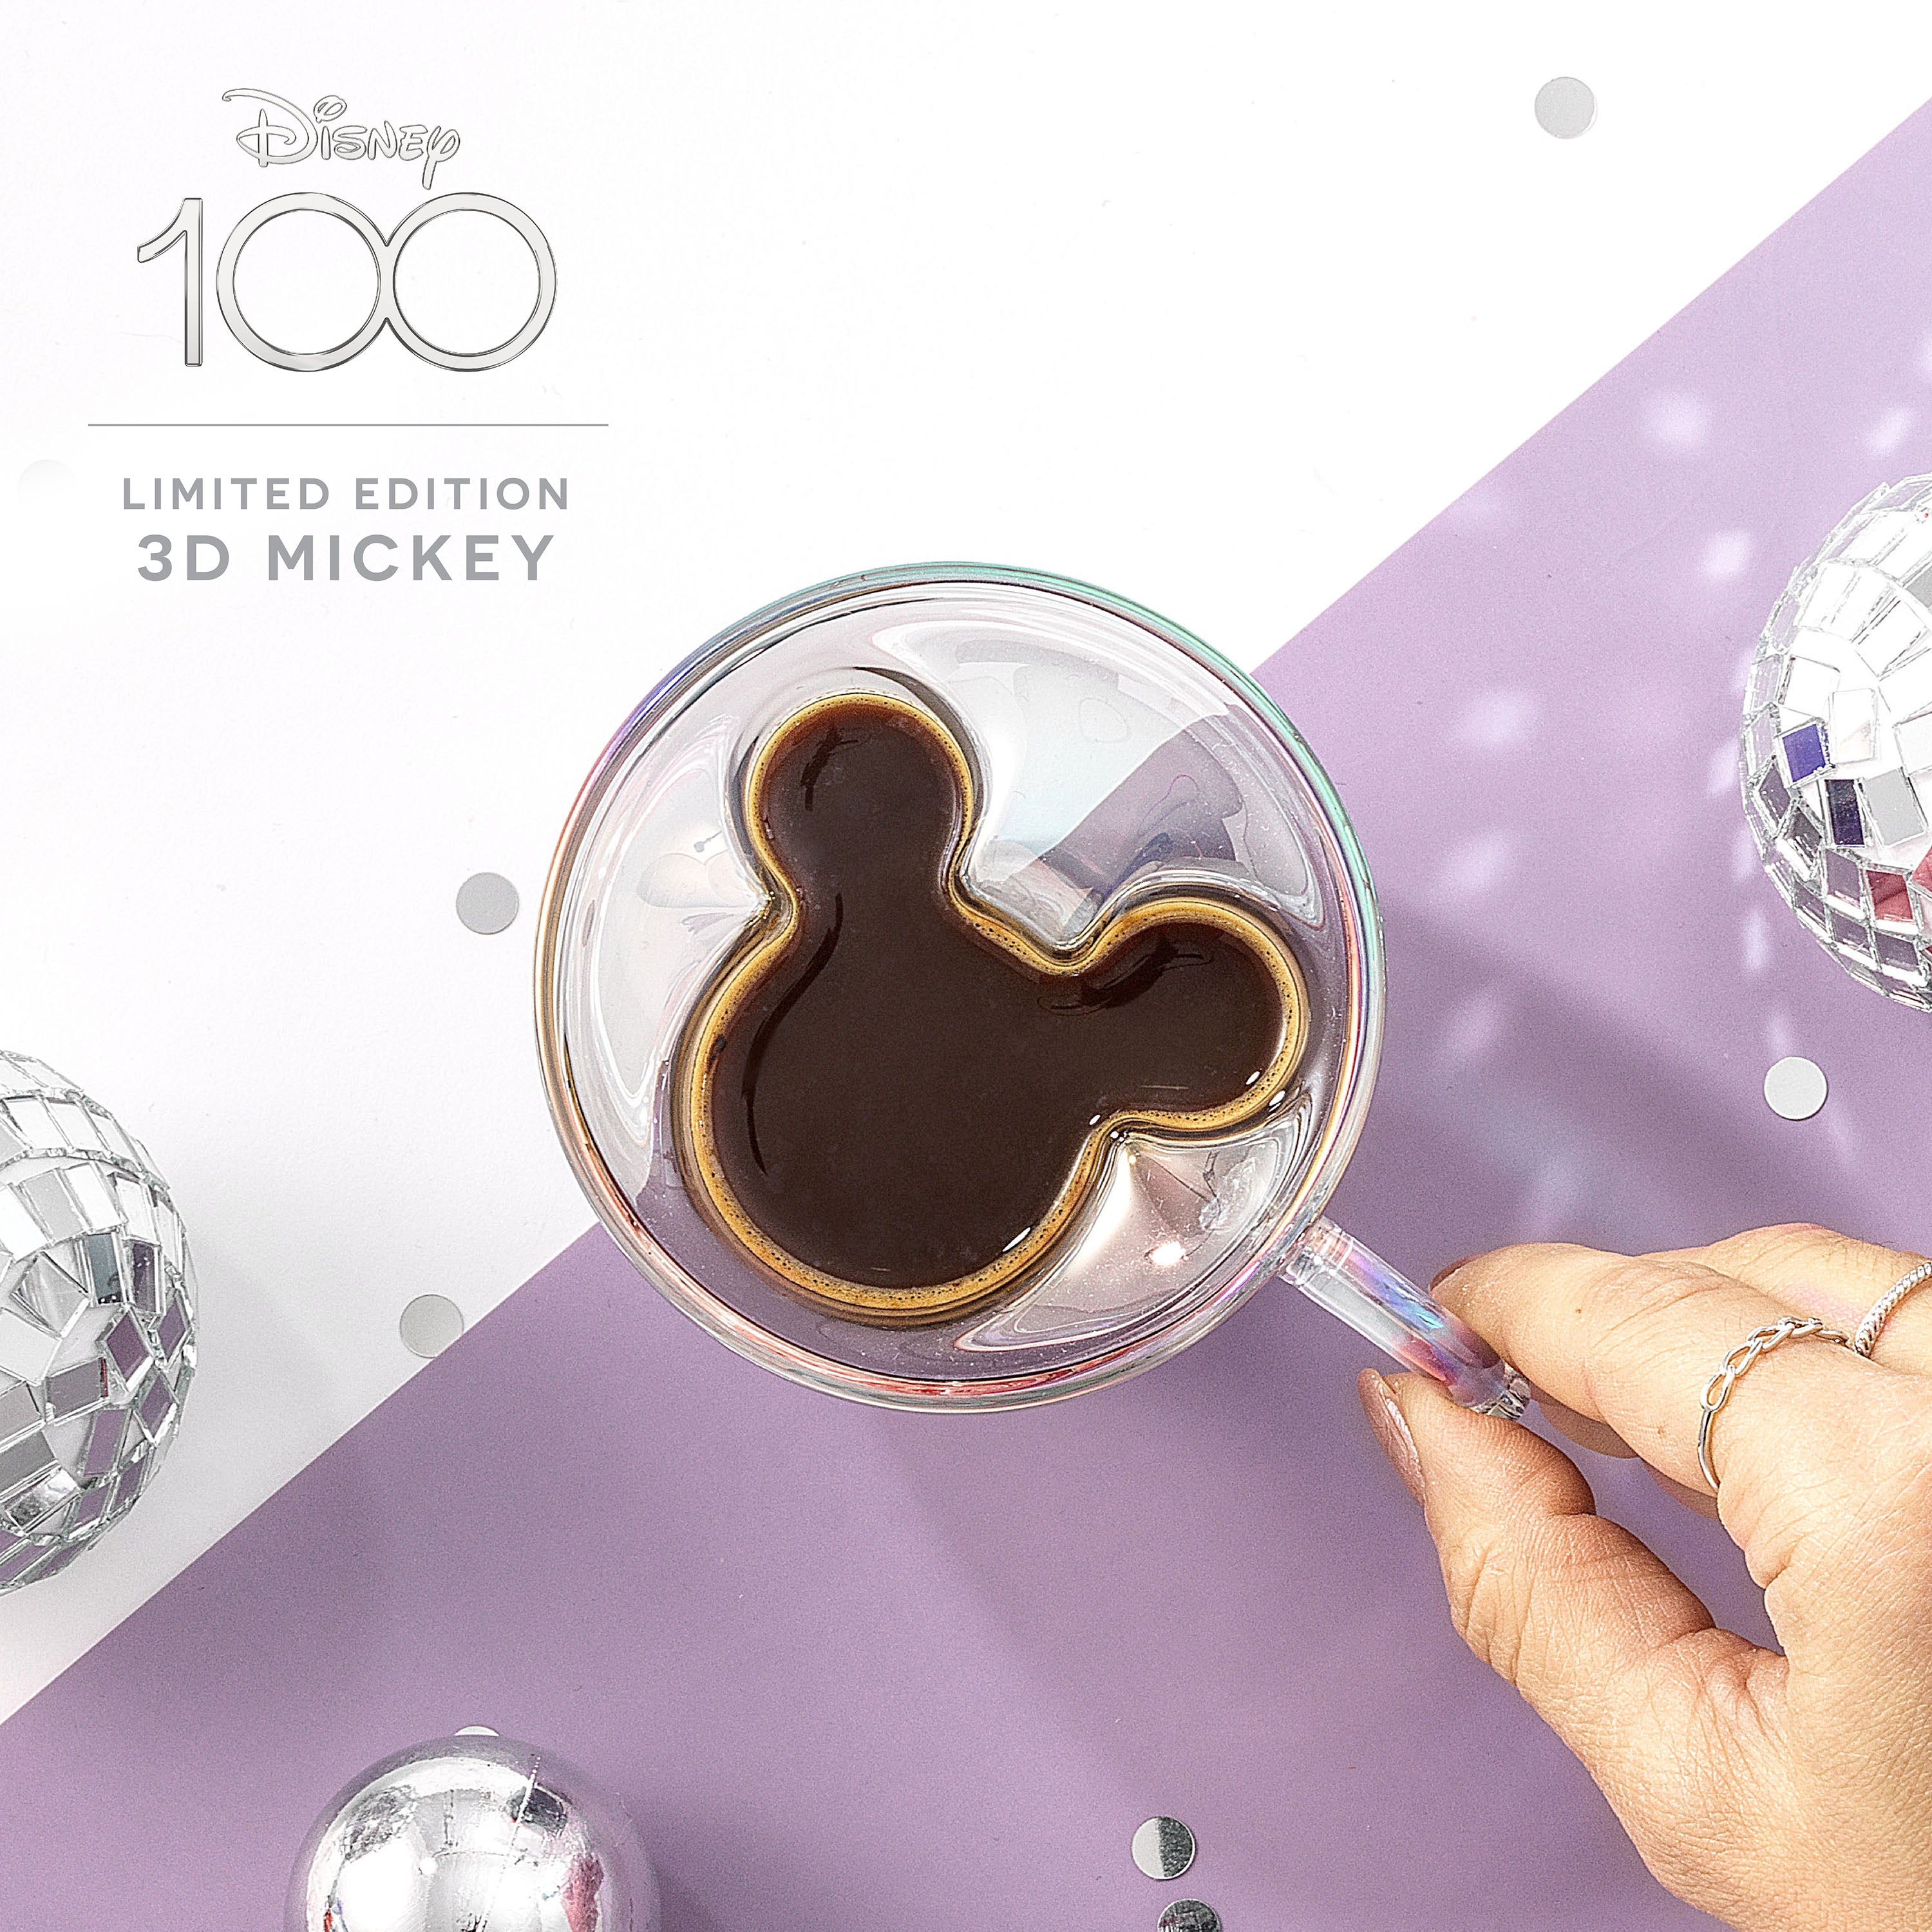 Disney100 Limited Edition 3D Mickey Double Wall Espresso Glass - 5.4 oz